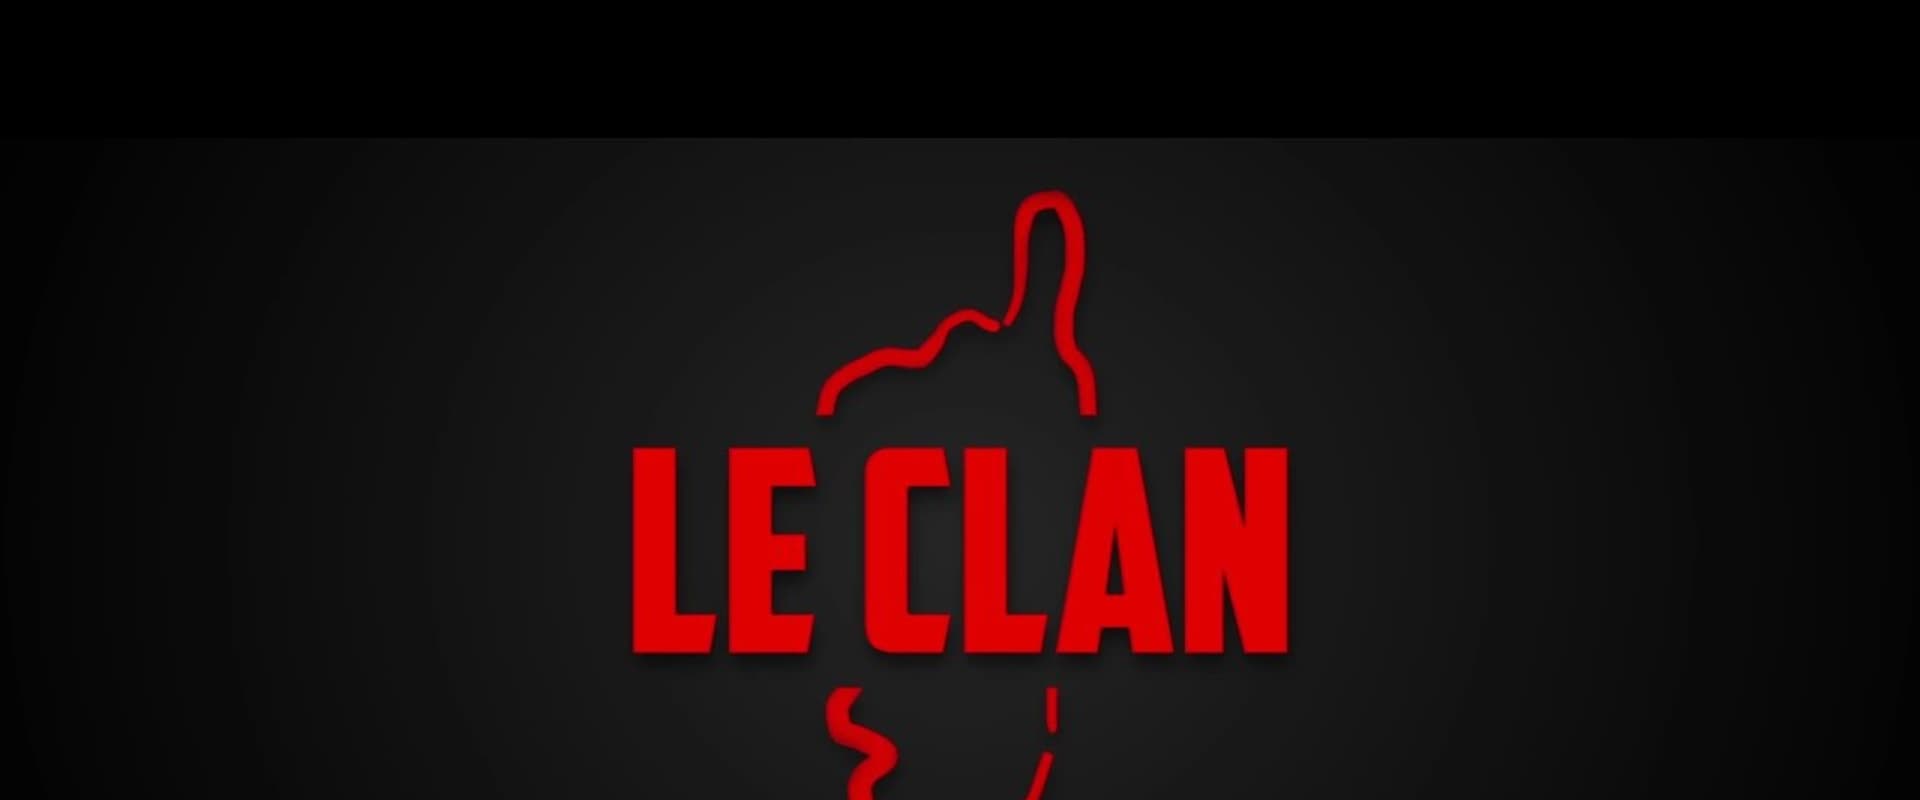 Le Clan